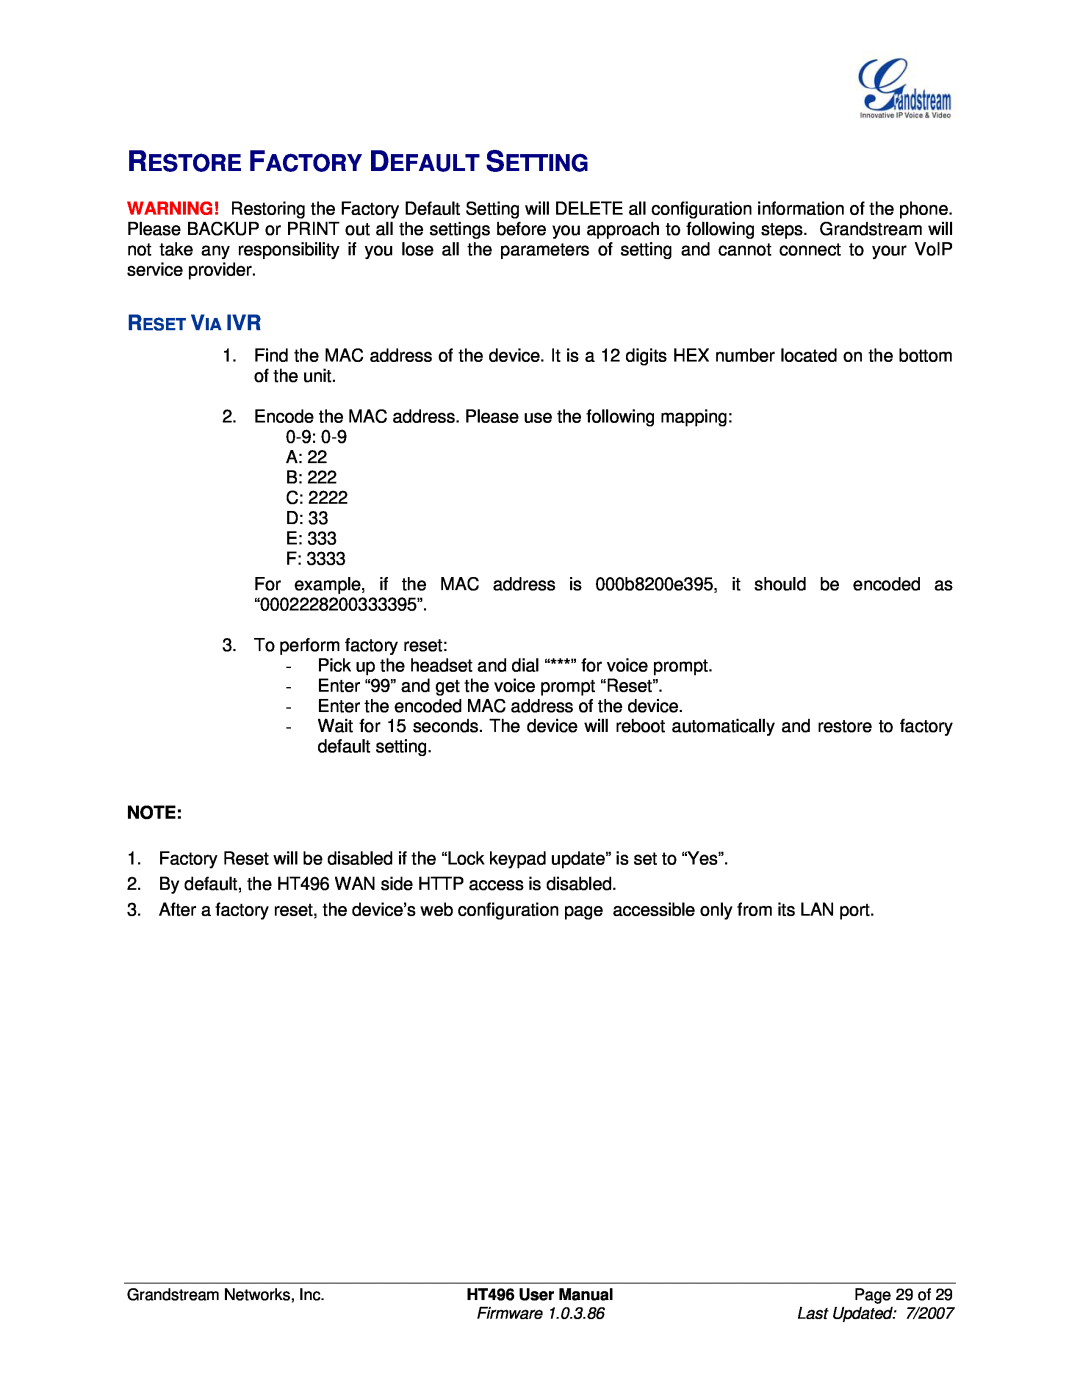 Grandstream Networks HT496 user manual Restore Factory Default Setting, Reset Via Ivr 